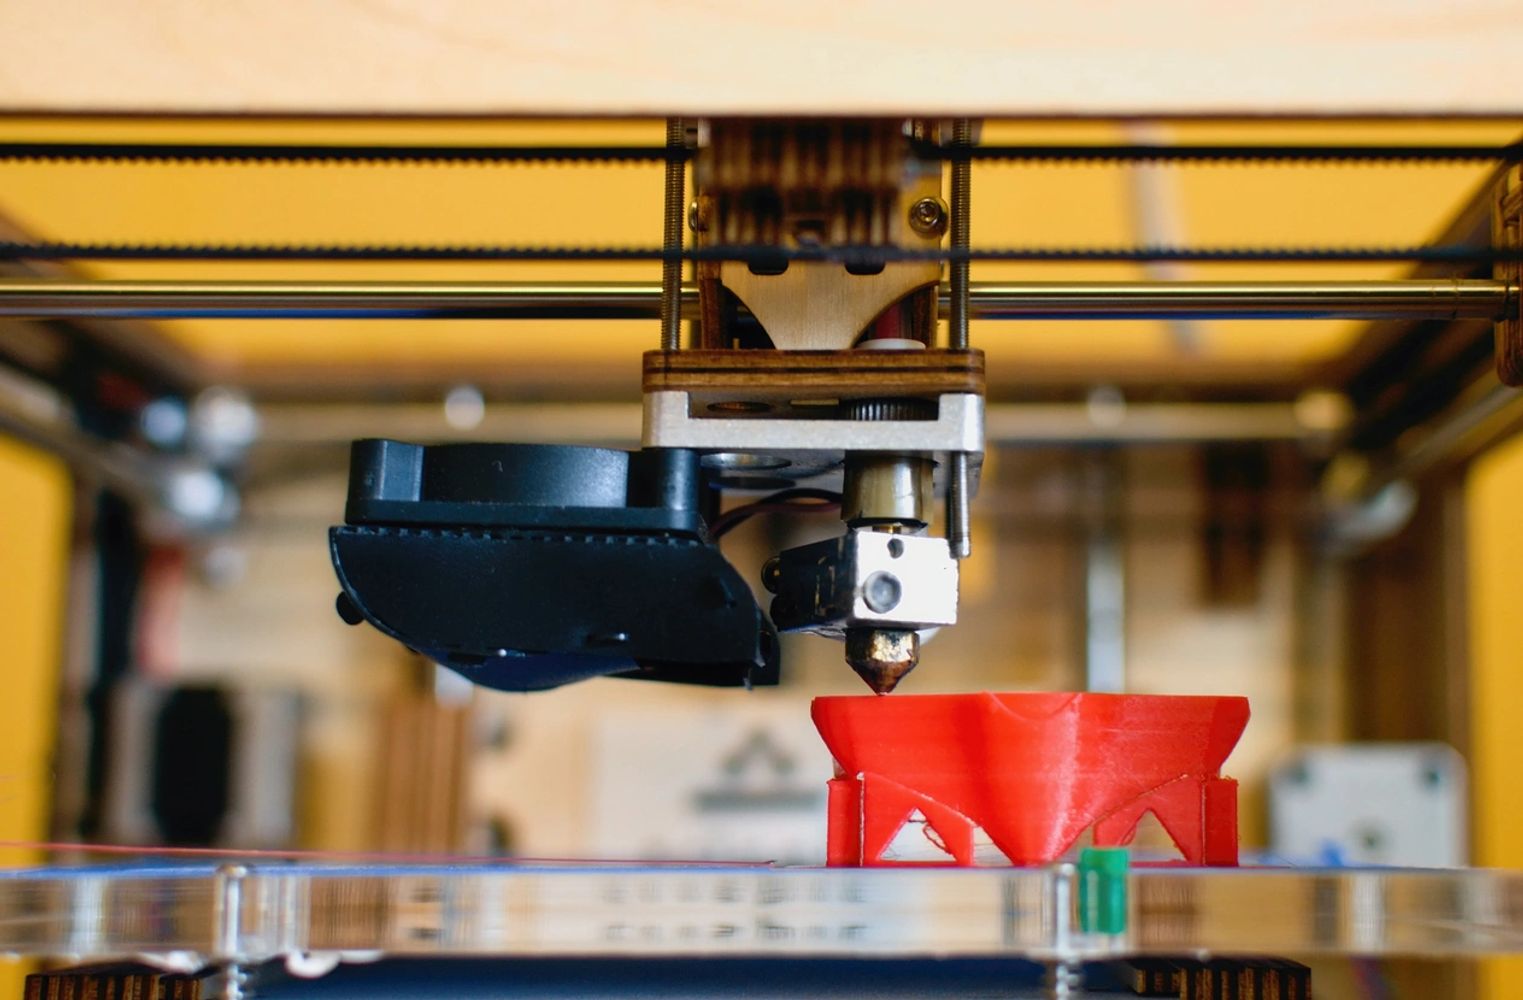 Build 3D printed parts 